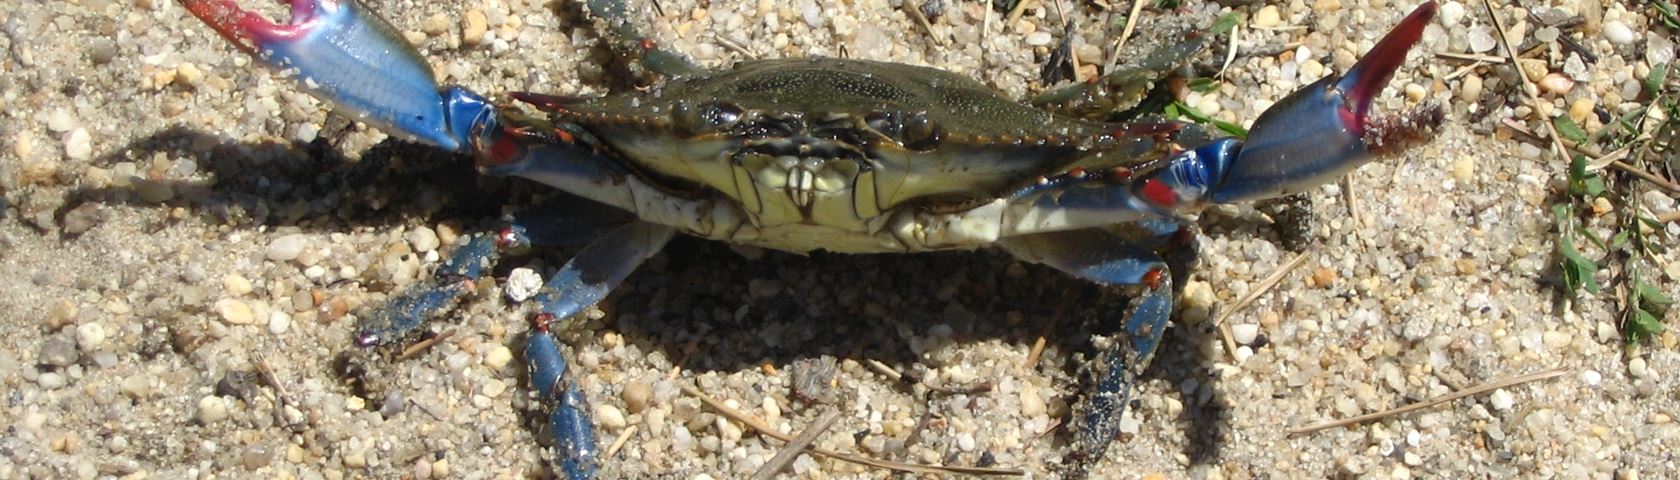 Jersey Crab